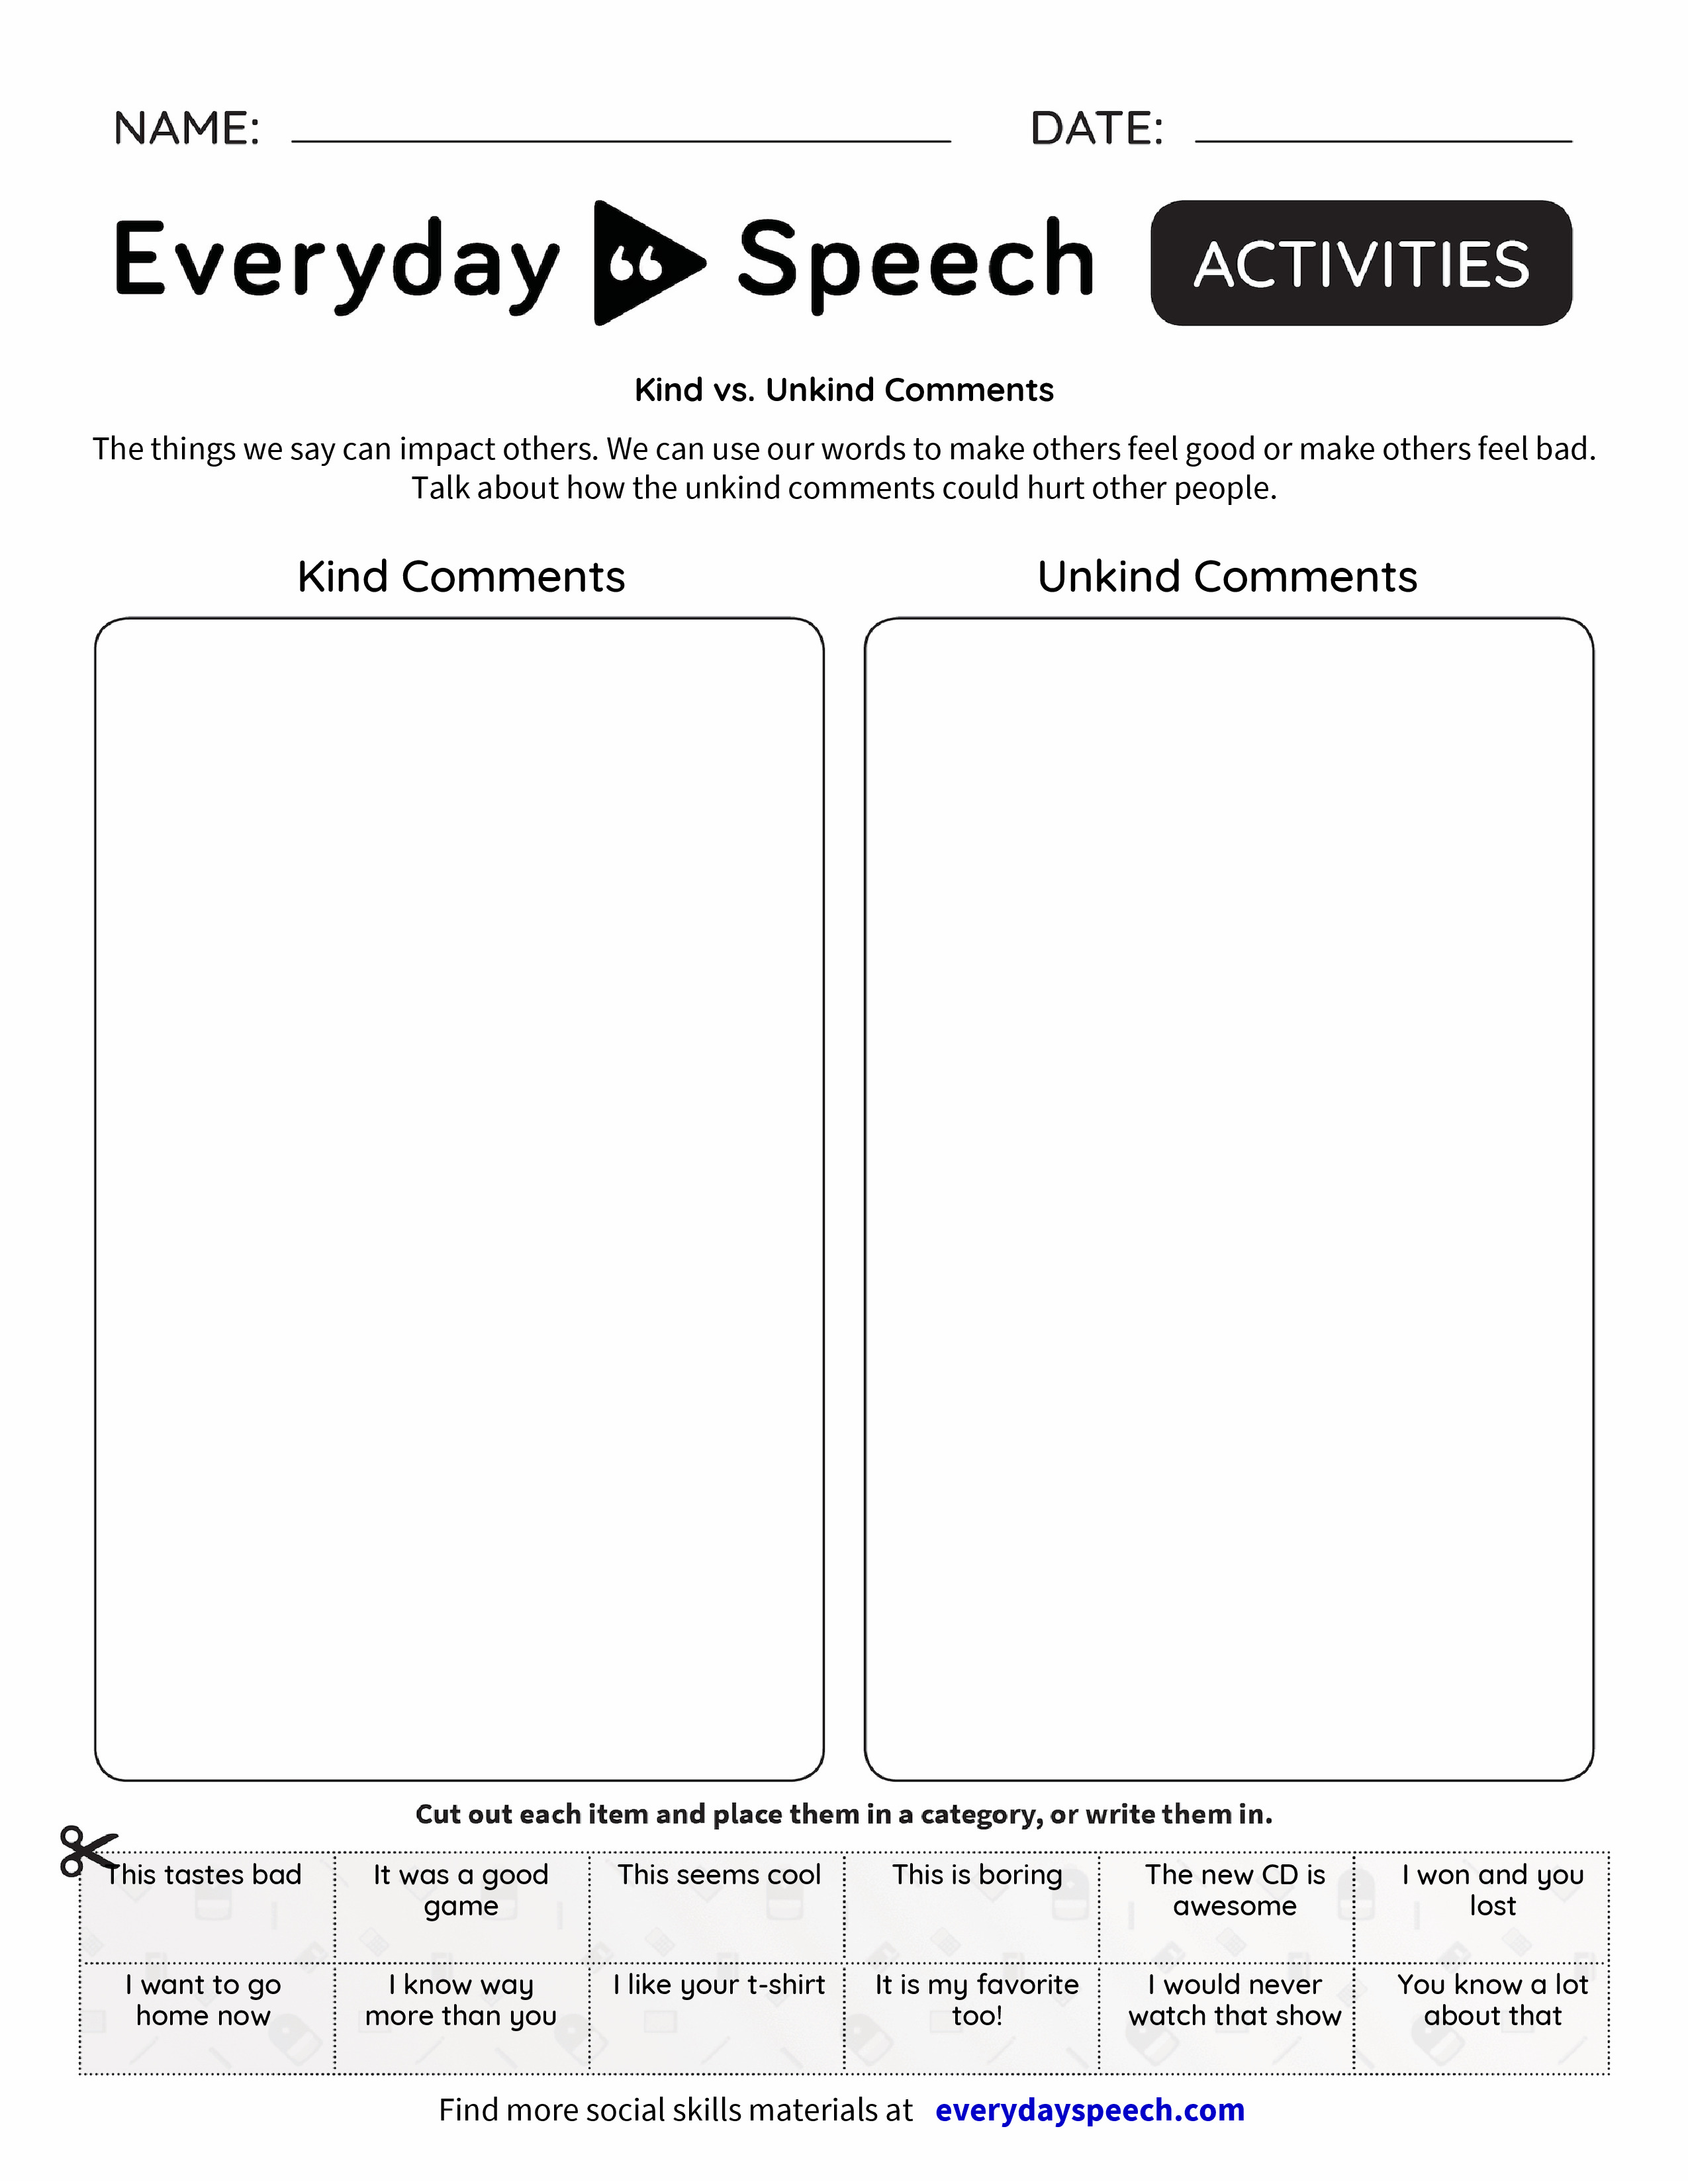 kind-vs-unkind-comments-everyday-speech-everyday-speech